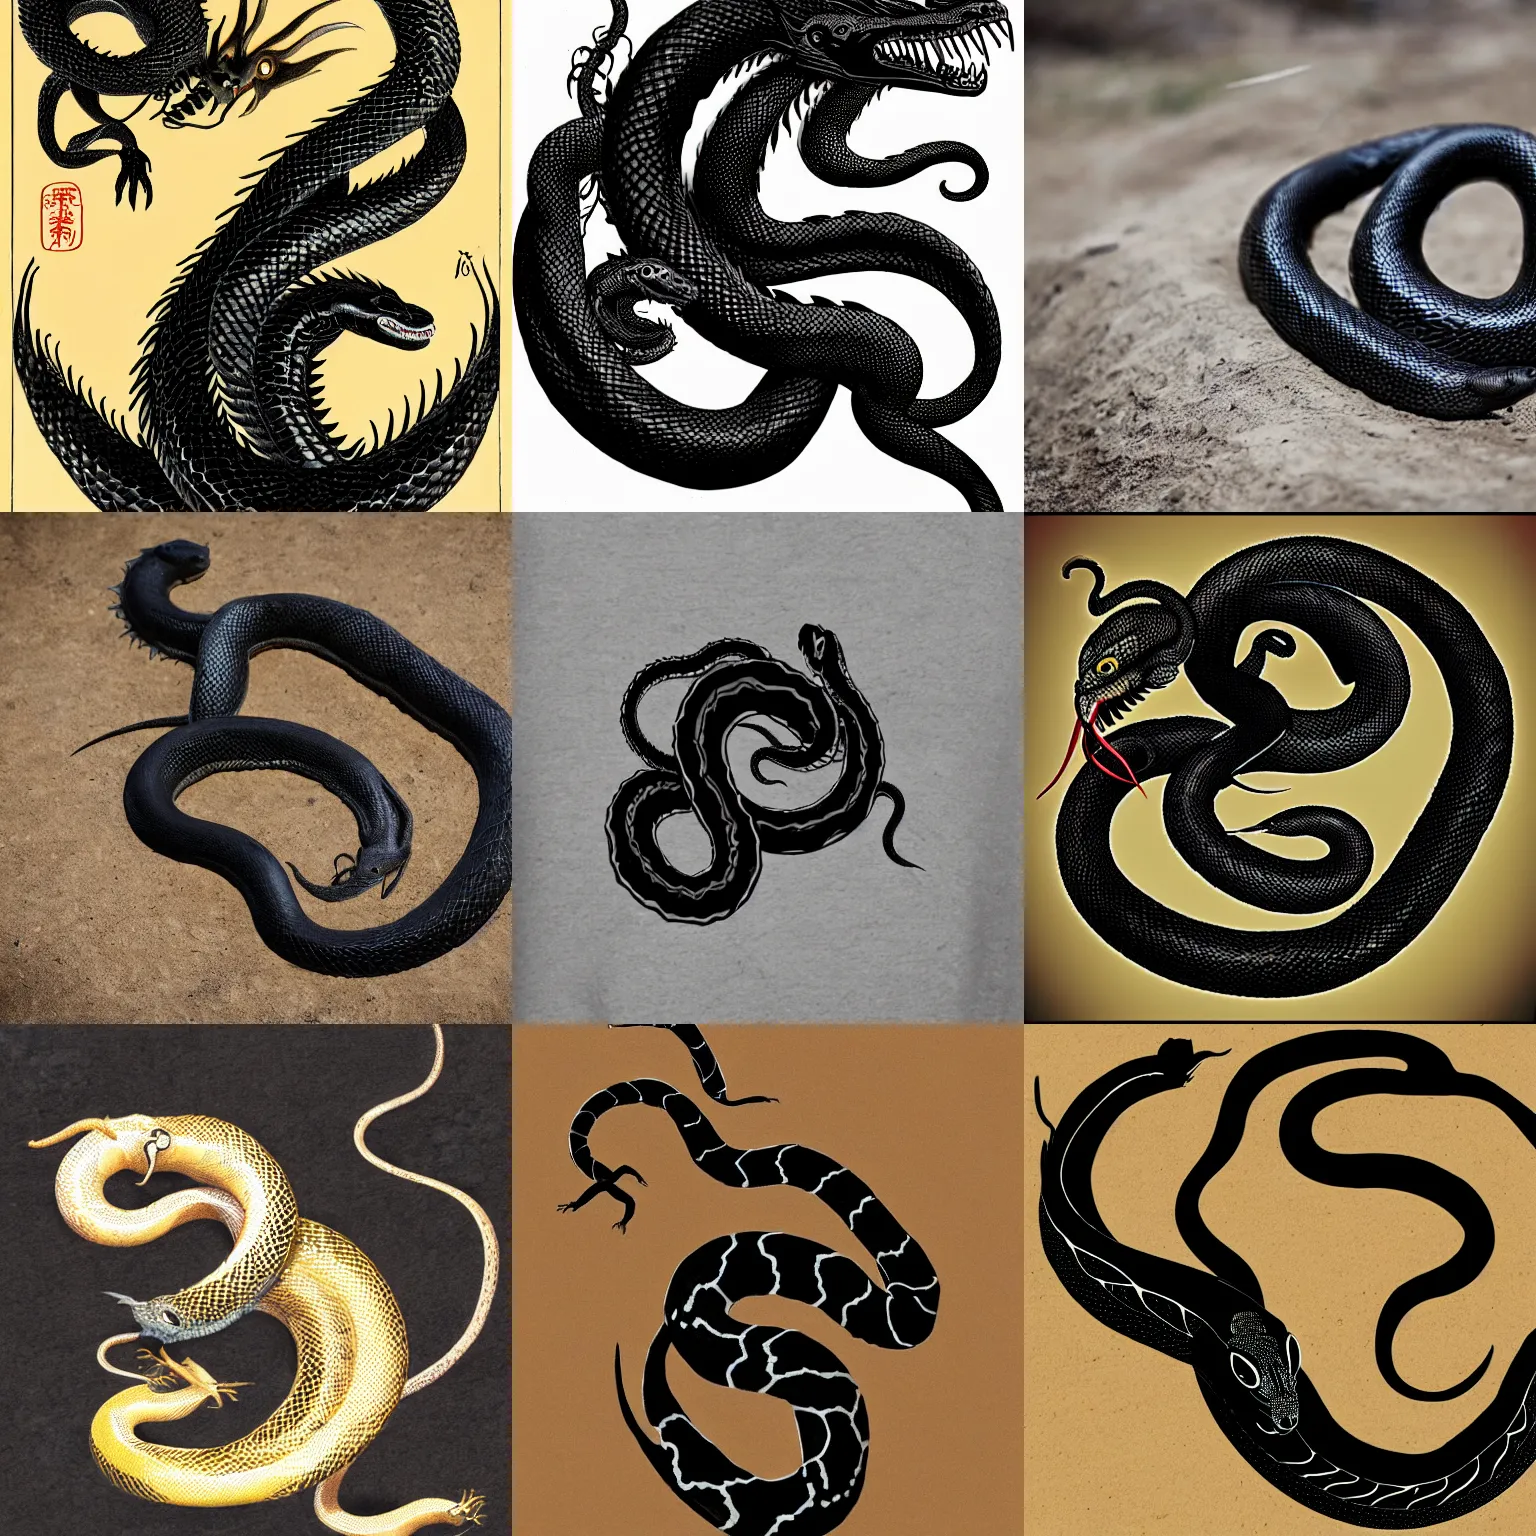 Prompt: black dragon looking snake